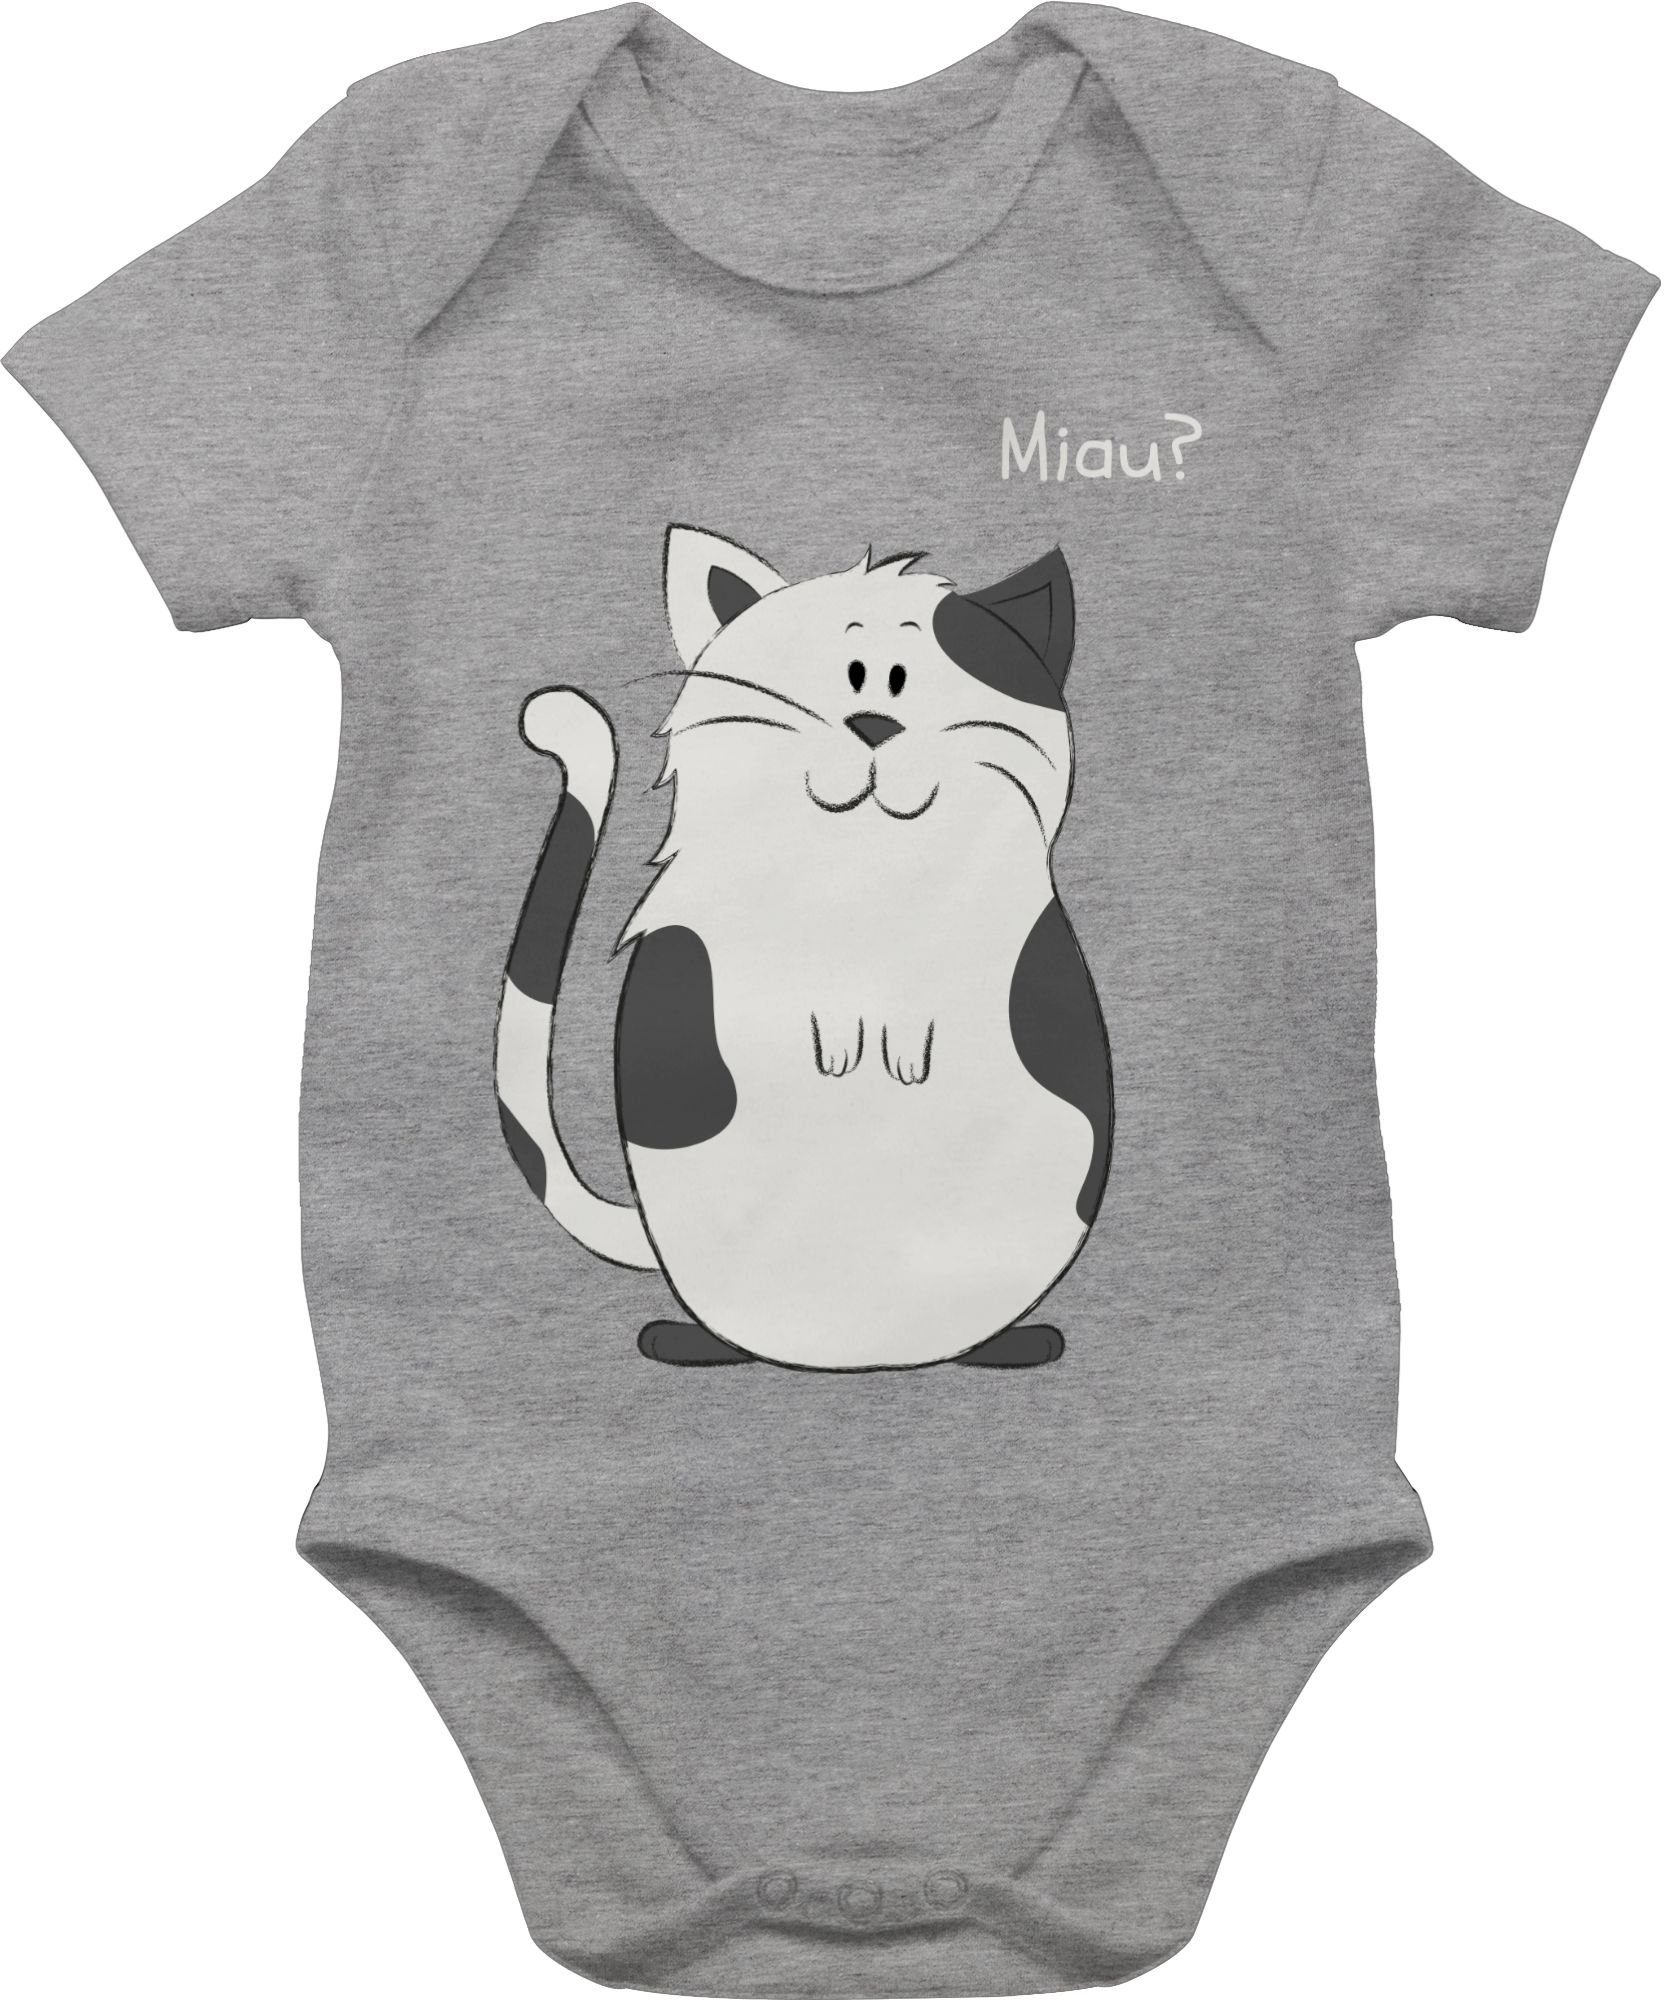 Shirtracer Shirtbody lustige Katze Tiermotiv Animal Print Baby 1 Grau meliert